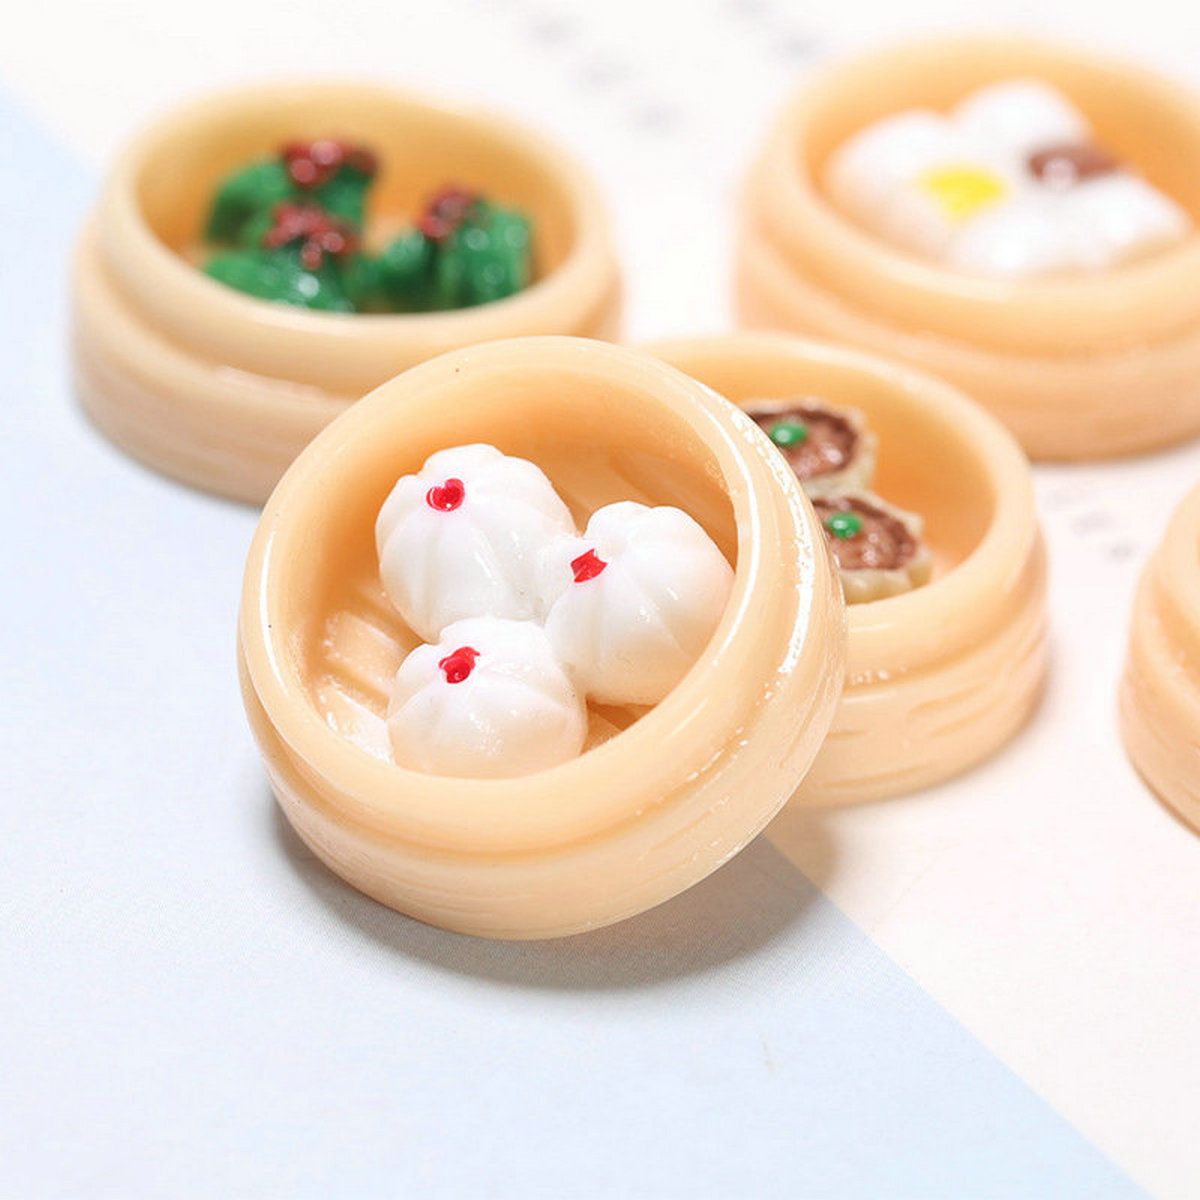 Simulation Mini Food Model Decoration DIY Ornament Accessories Keychain Material Love Fried Egg Breakfast